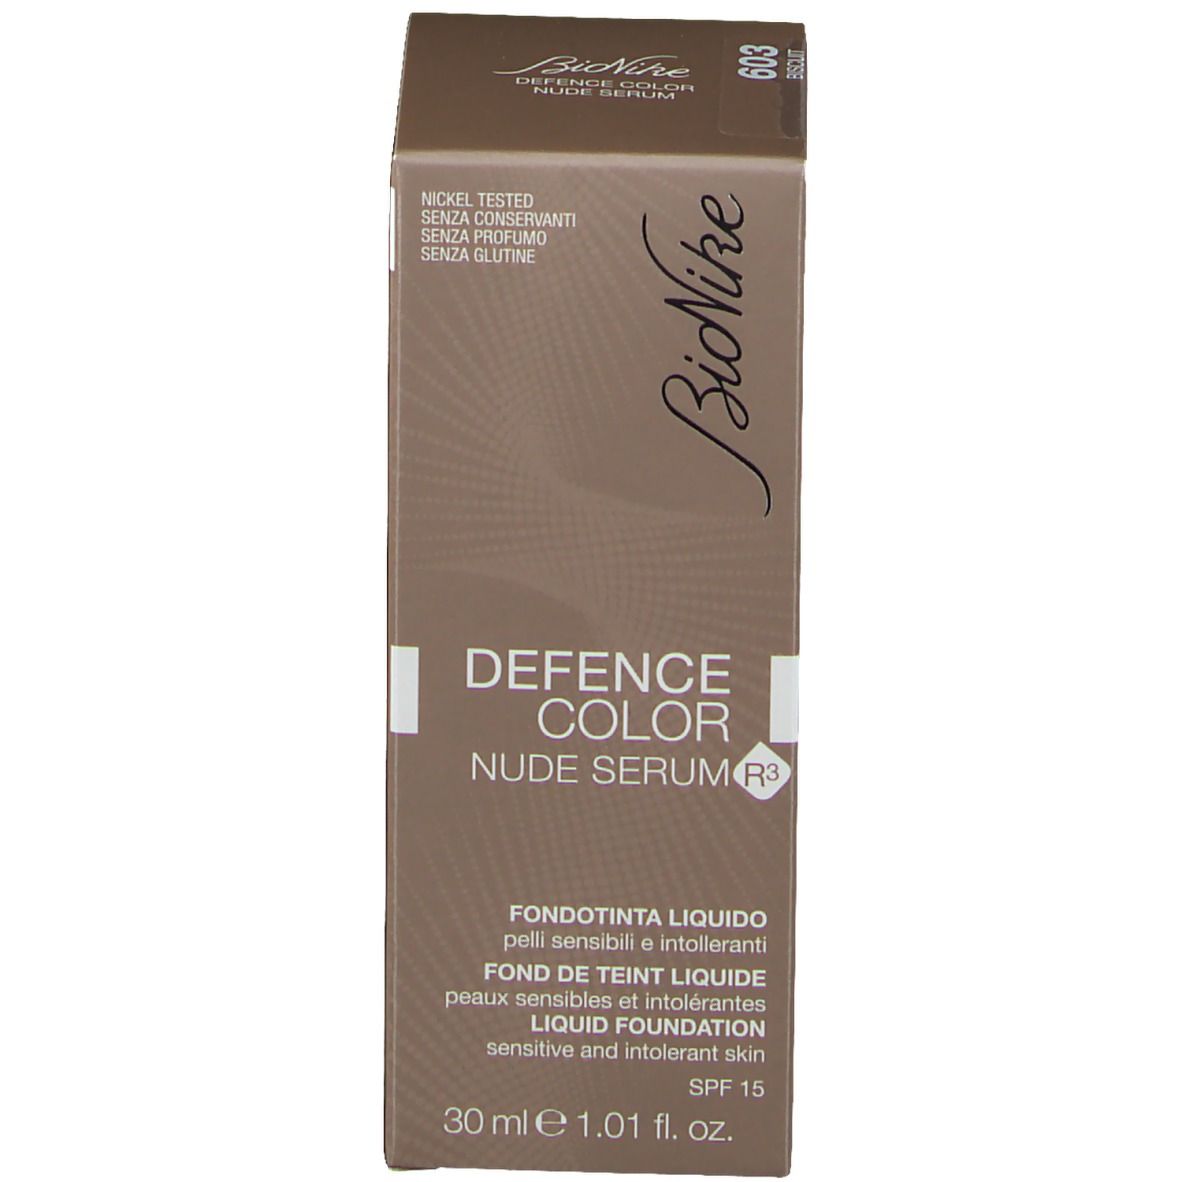 BioNike Defence Color Nude Serum R³ Fondotinta Liquido 603 